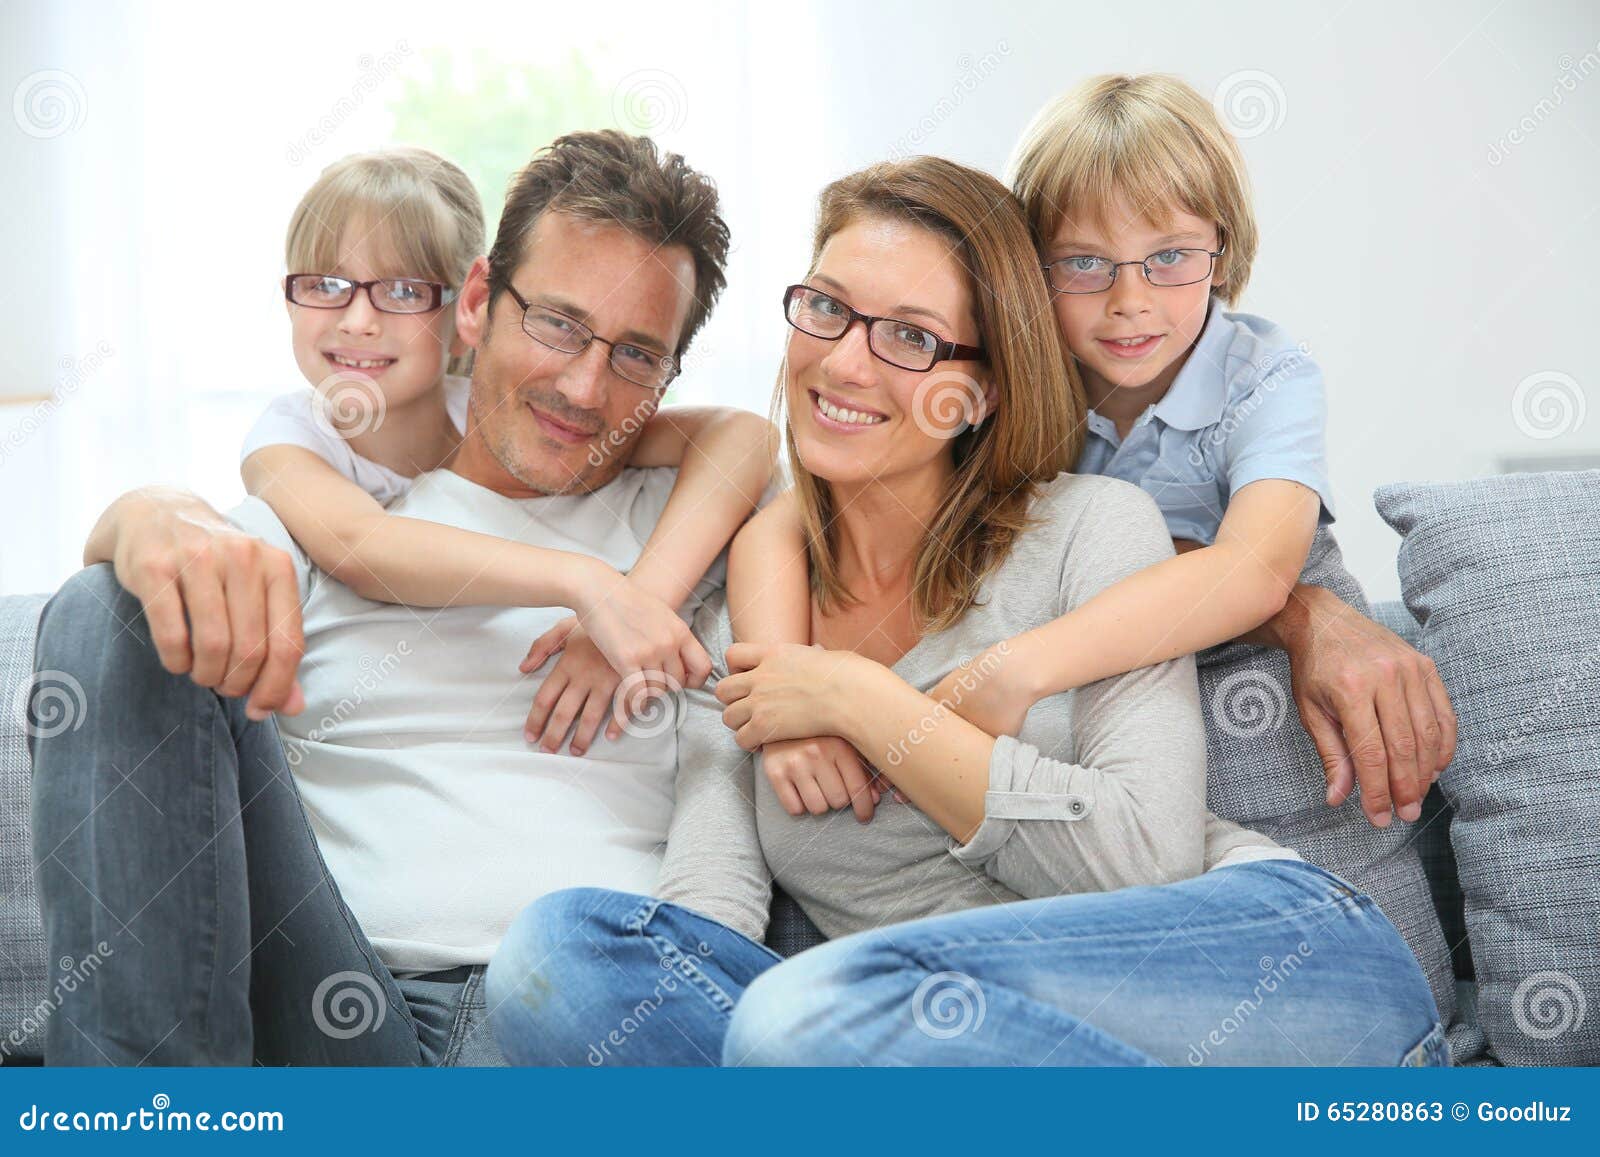 happy family sitting on sofa wearing eyeglasses